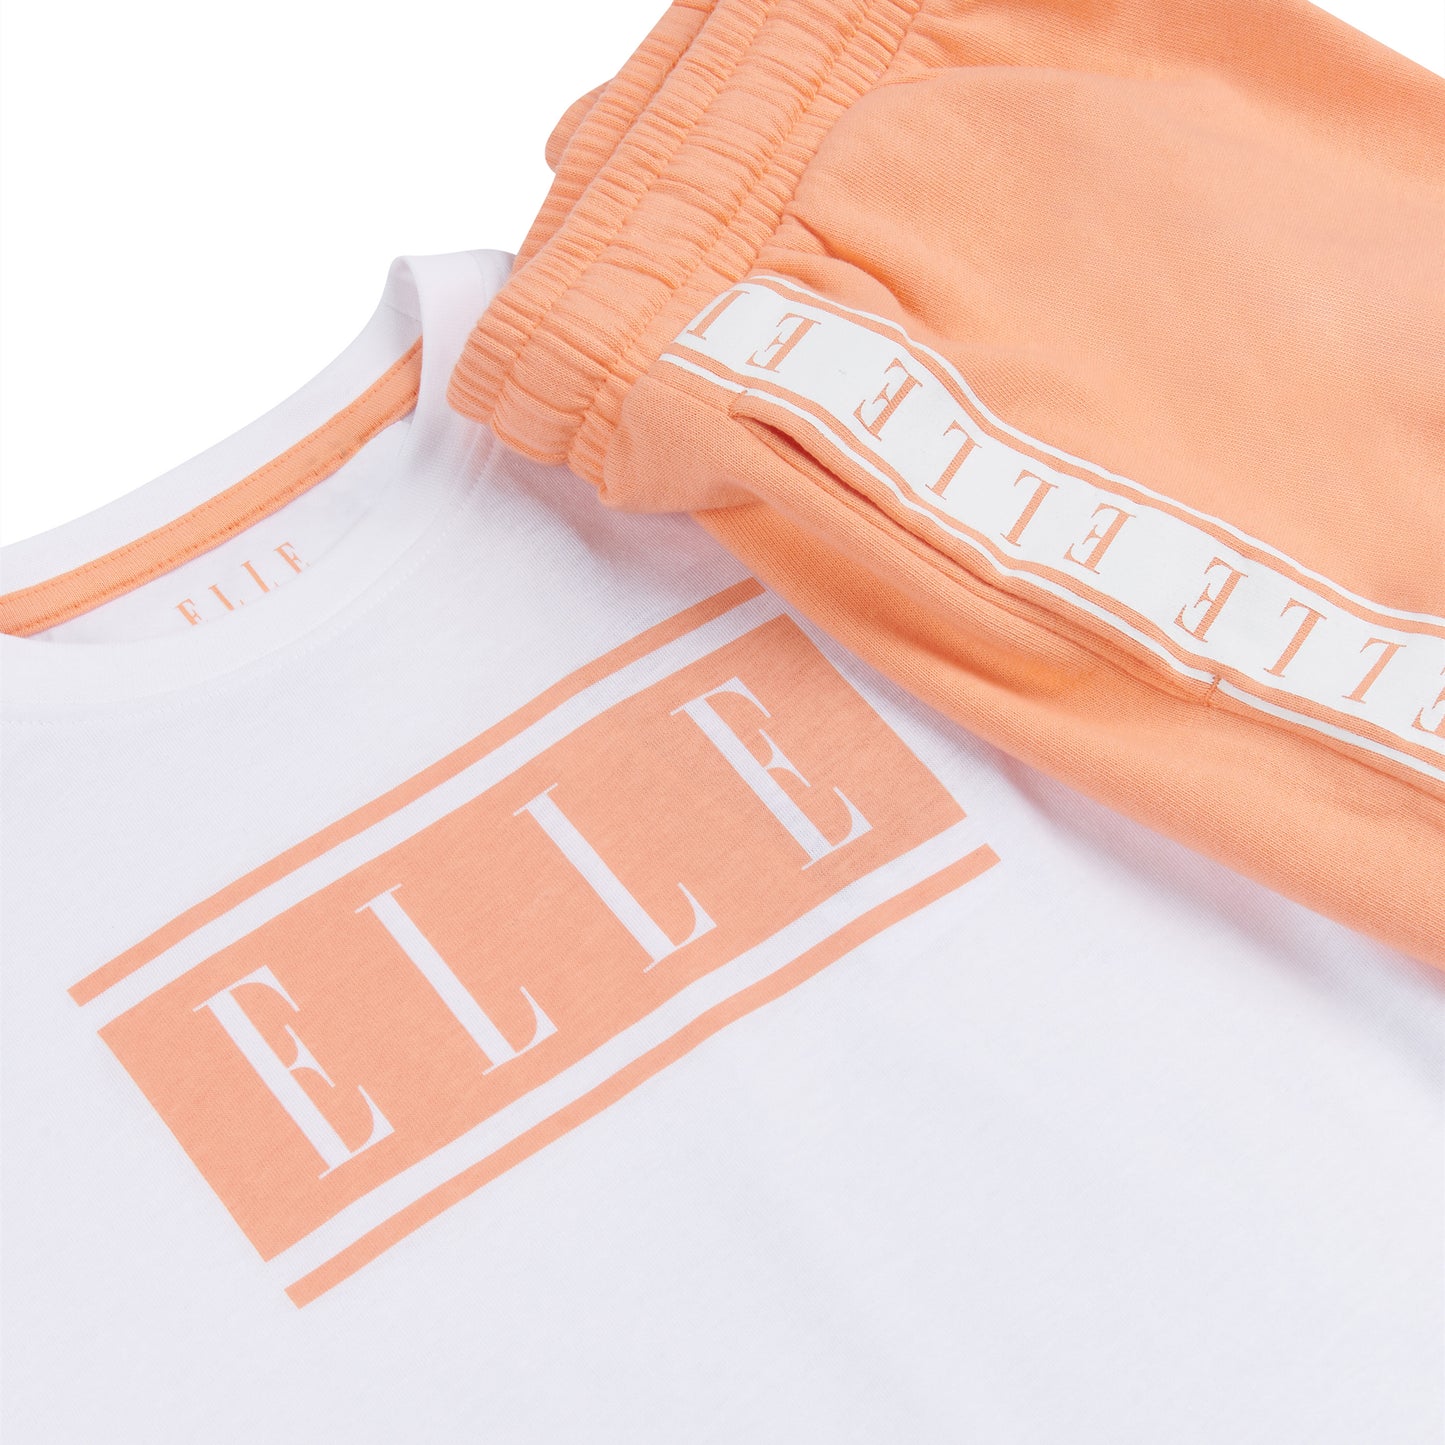 ELLE Girls Bright White and Orange Logo T Shirt and Shorts